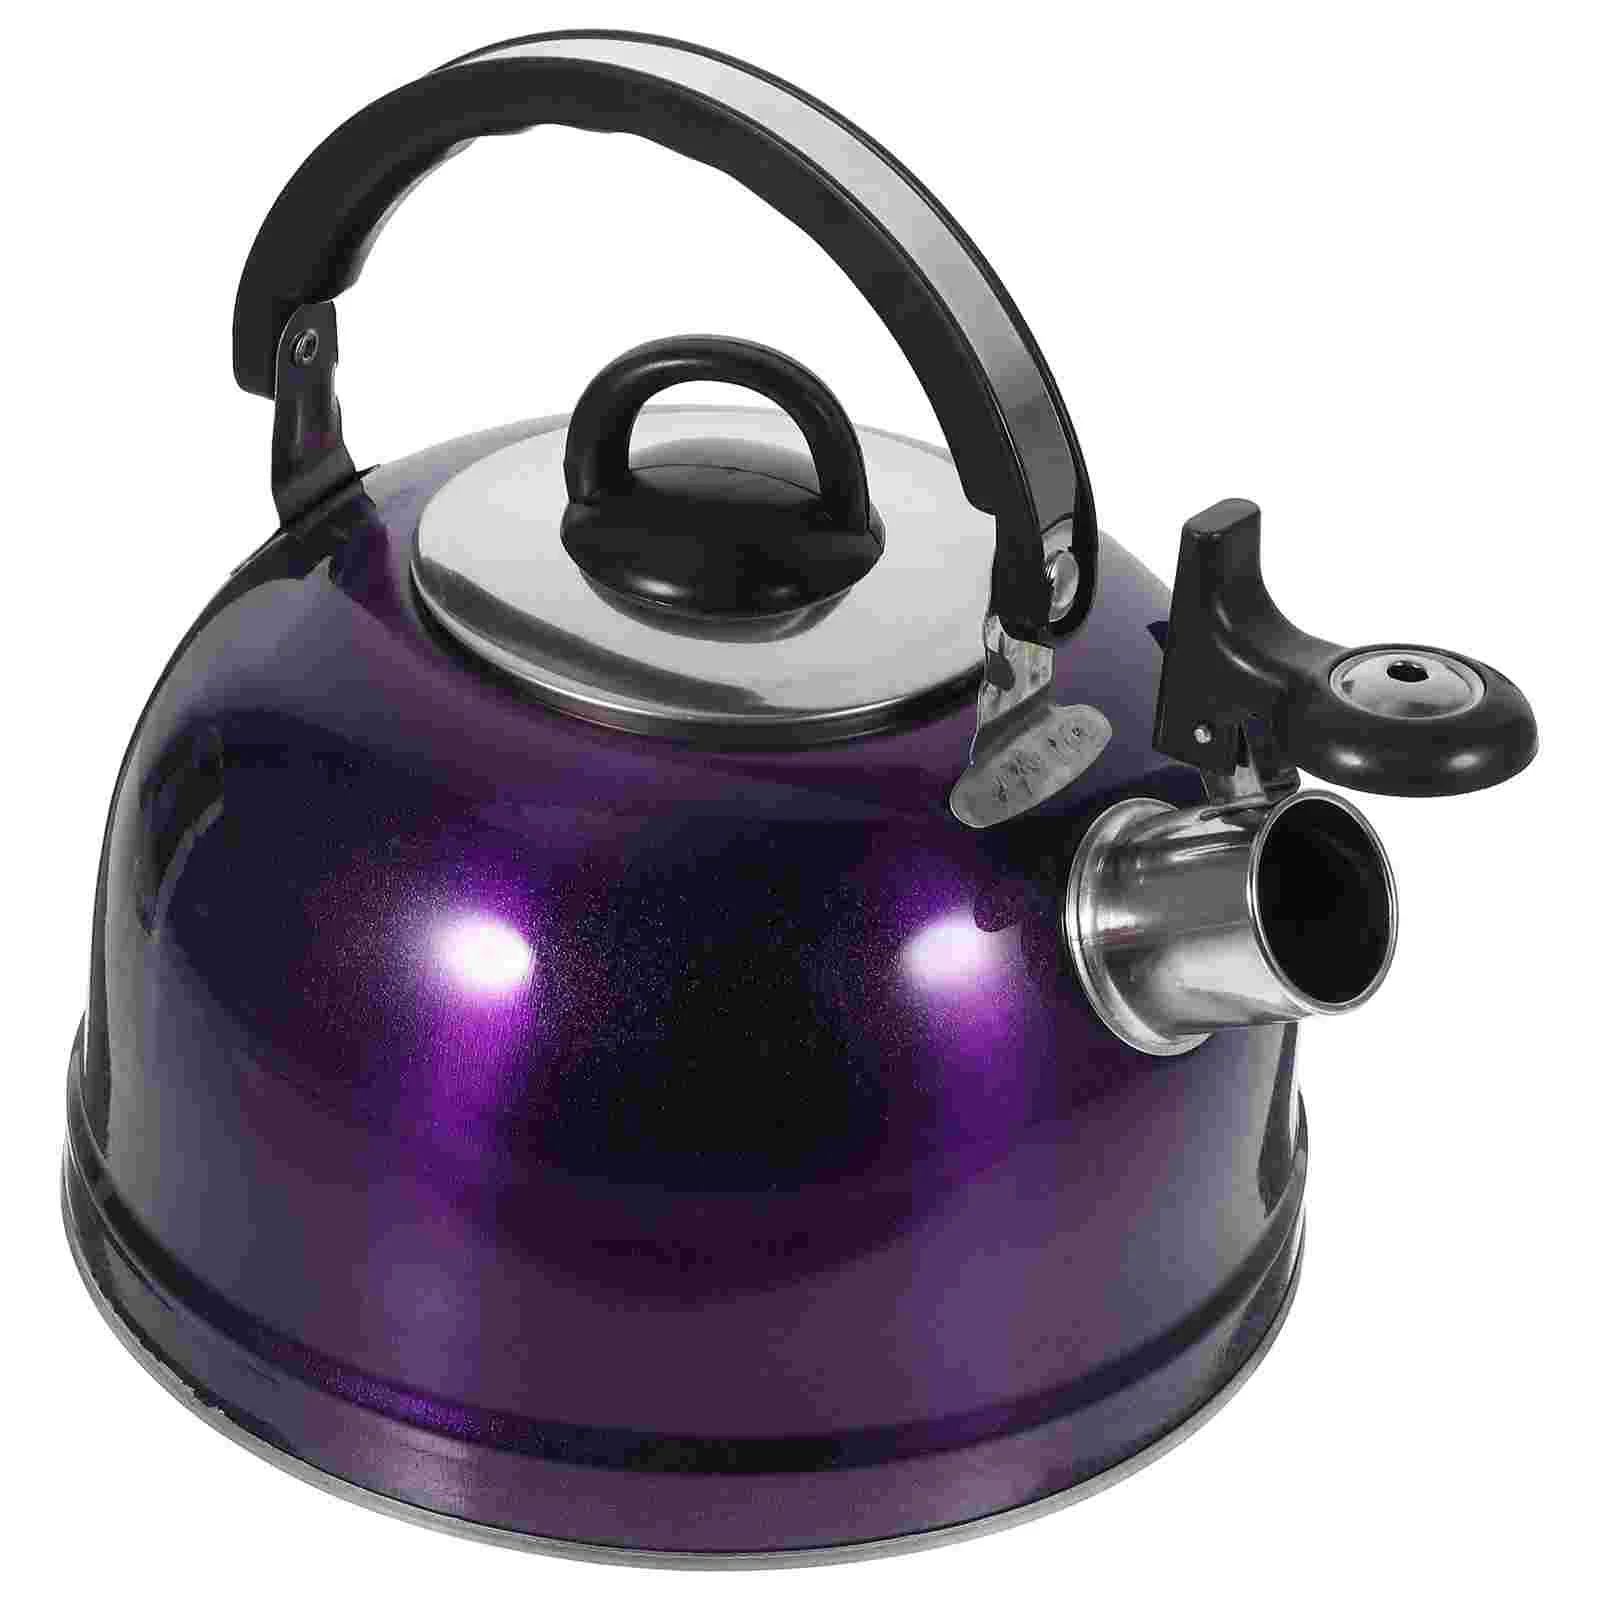 

Hot Water Whistling Kettle Boiled Water Pot Boiling Kettle Handle Pot Kettle for Home Restaurant